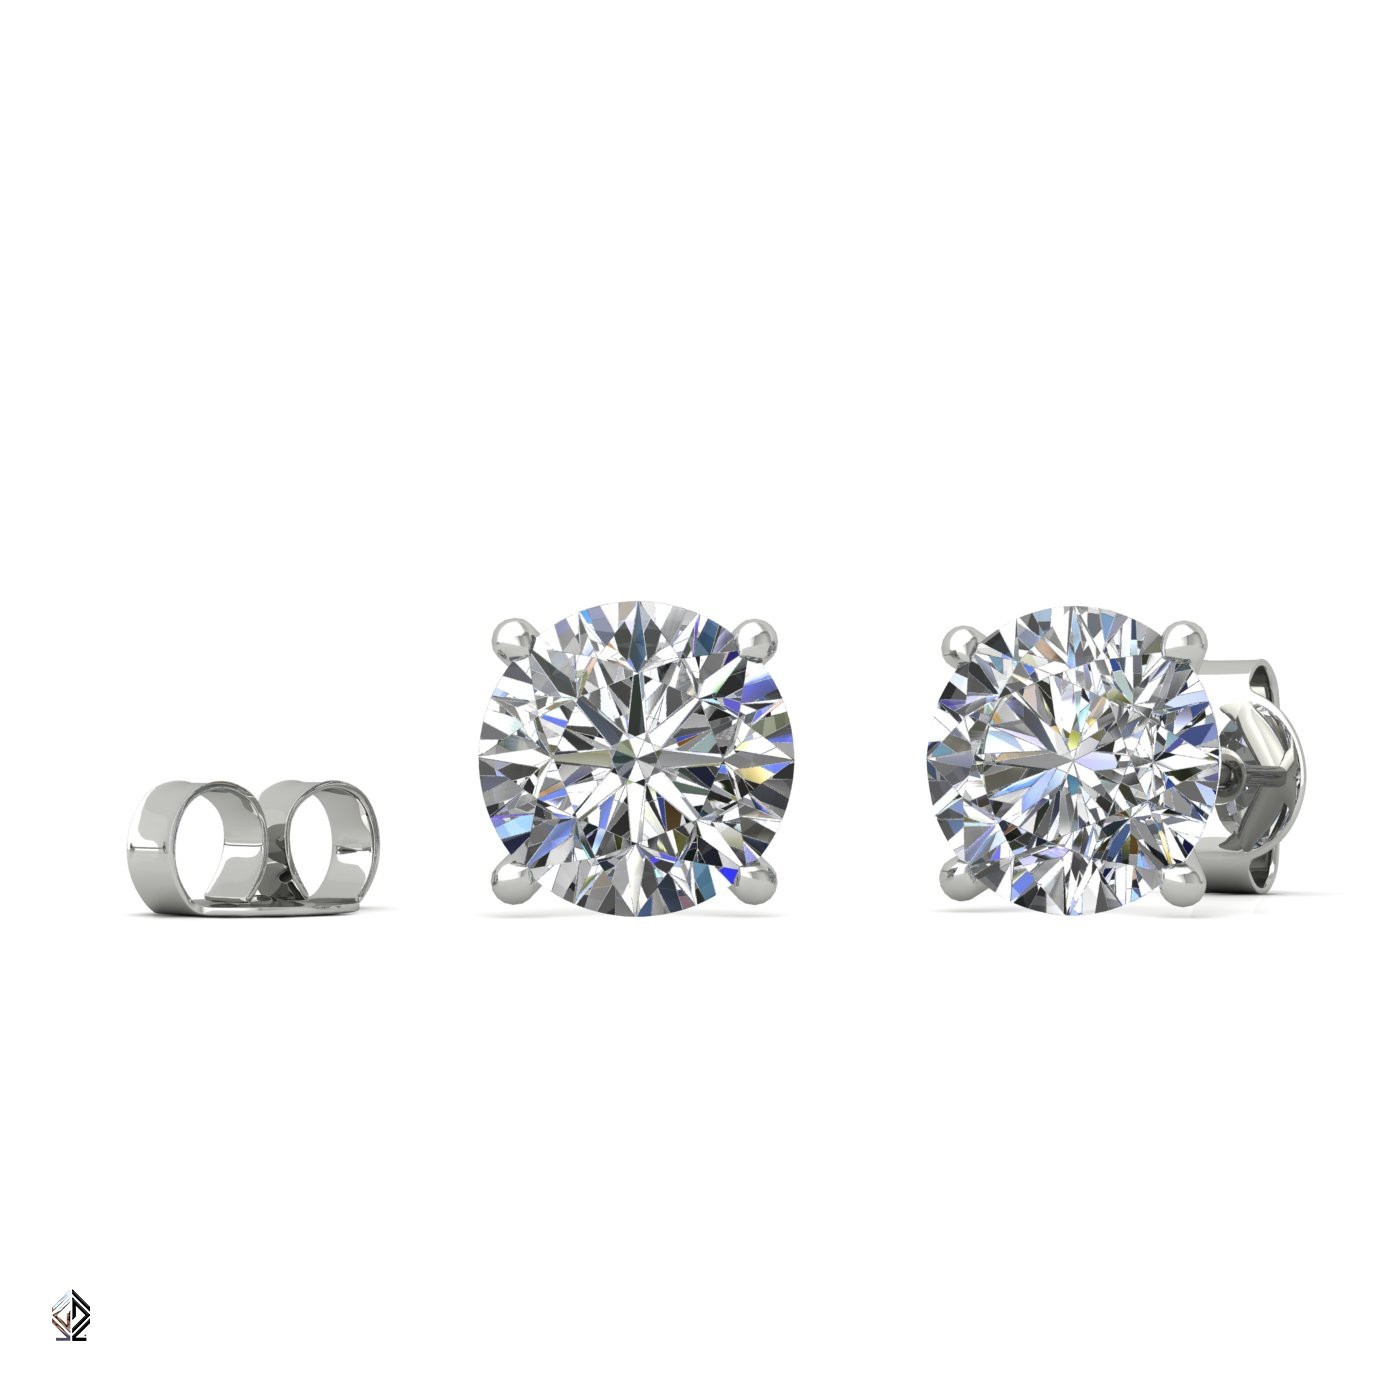 18k white gold 1.0 ct each (2,0 tcw) 4 prongs round cut classic diamond earring studs